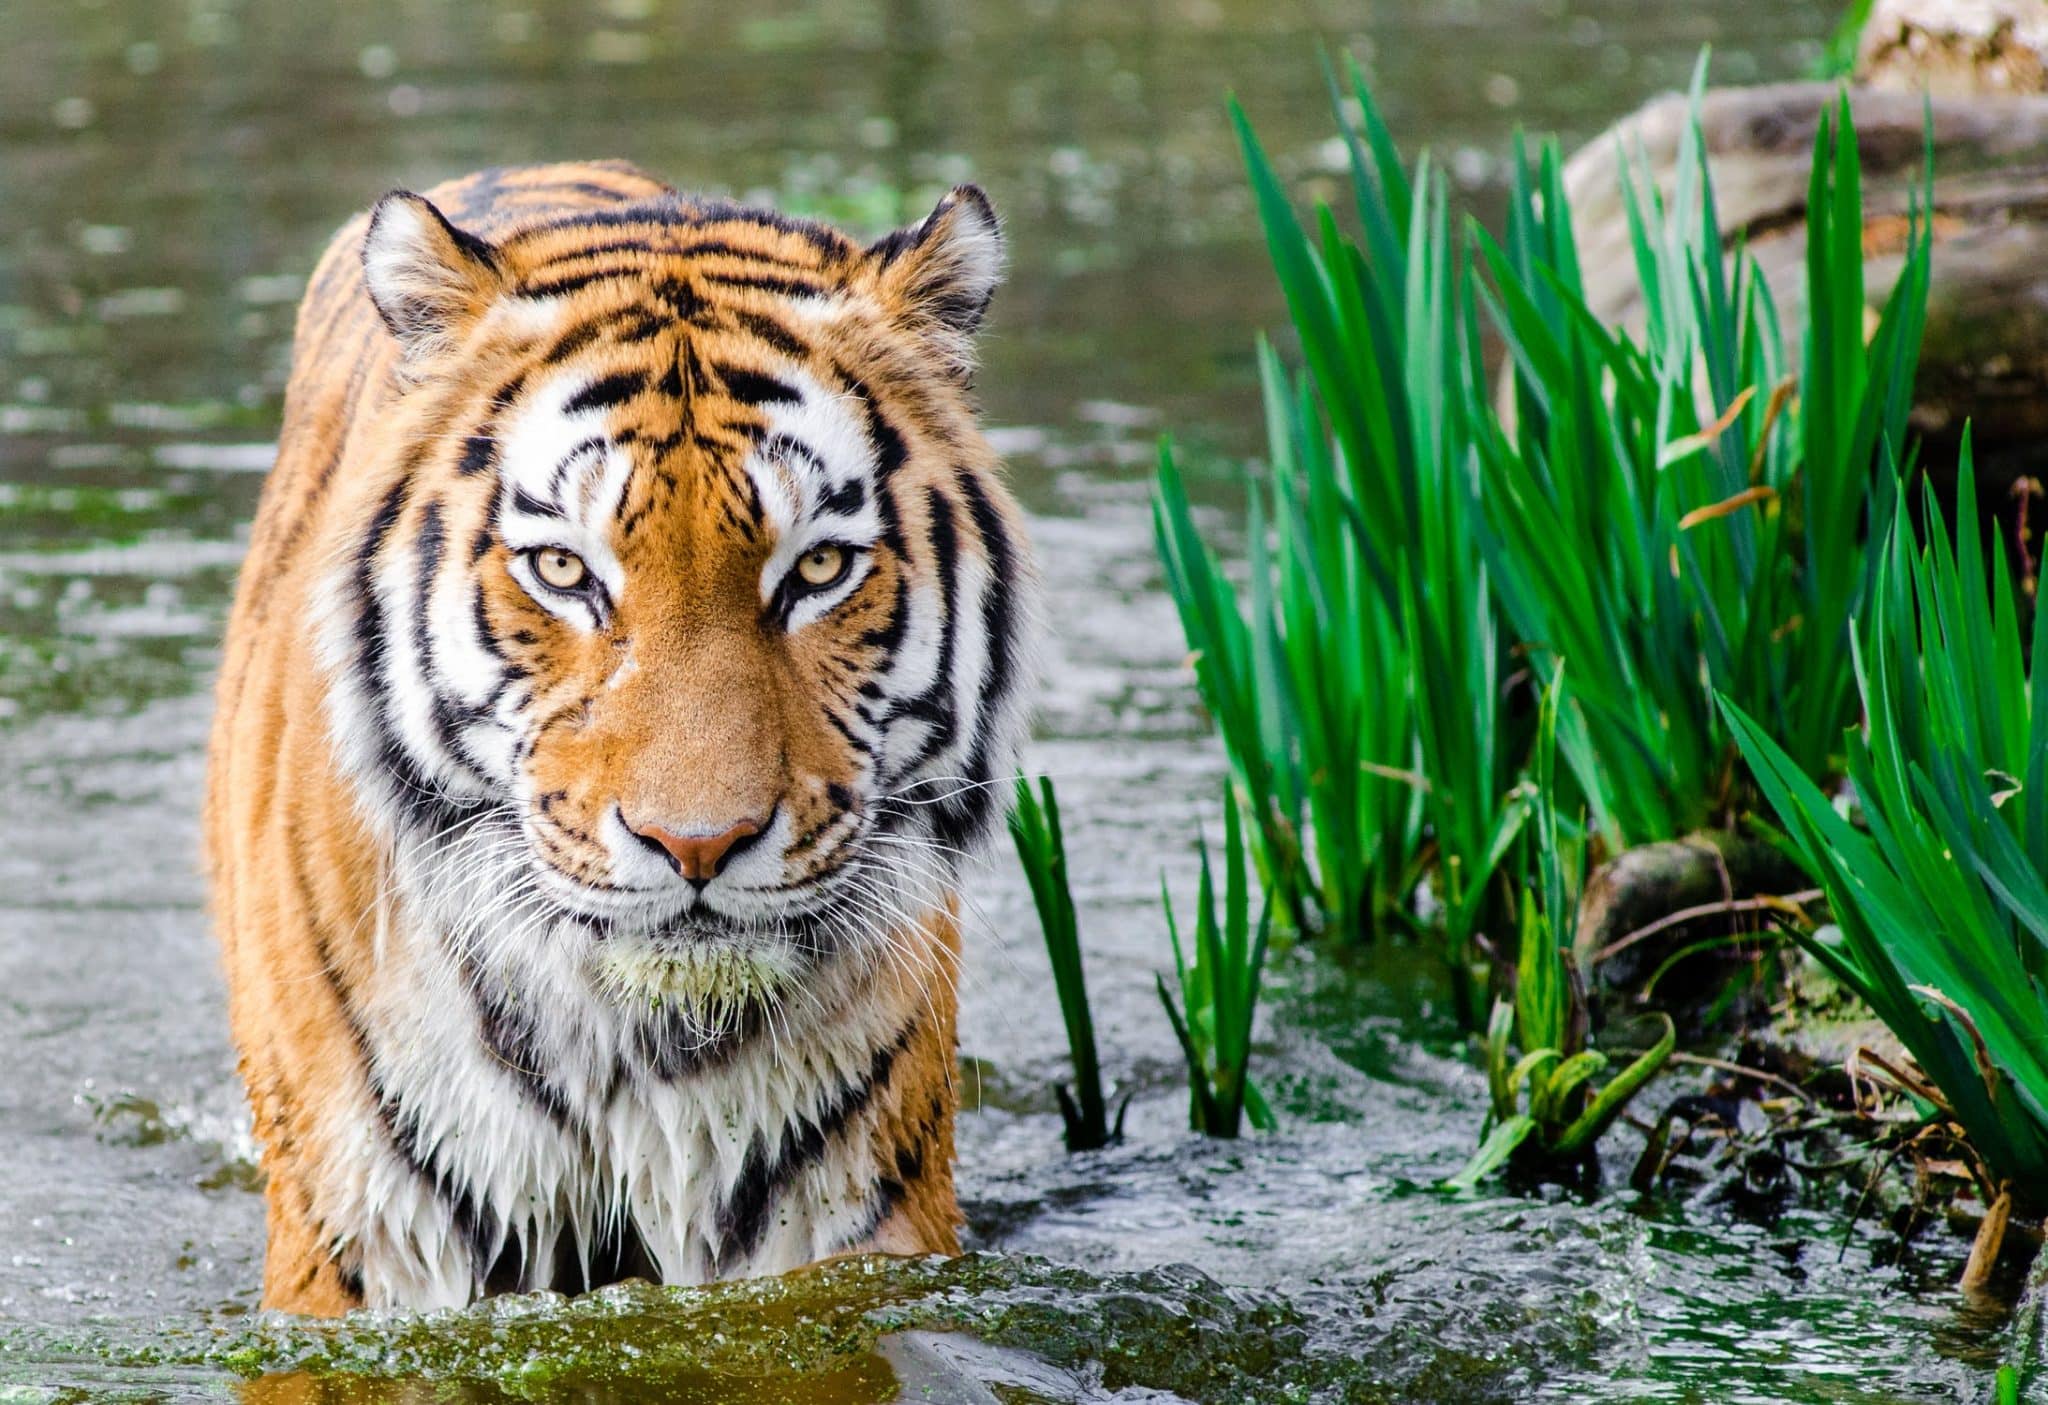 Tiger Safari: All you need to know